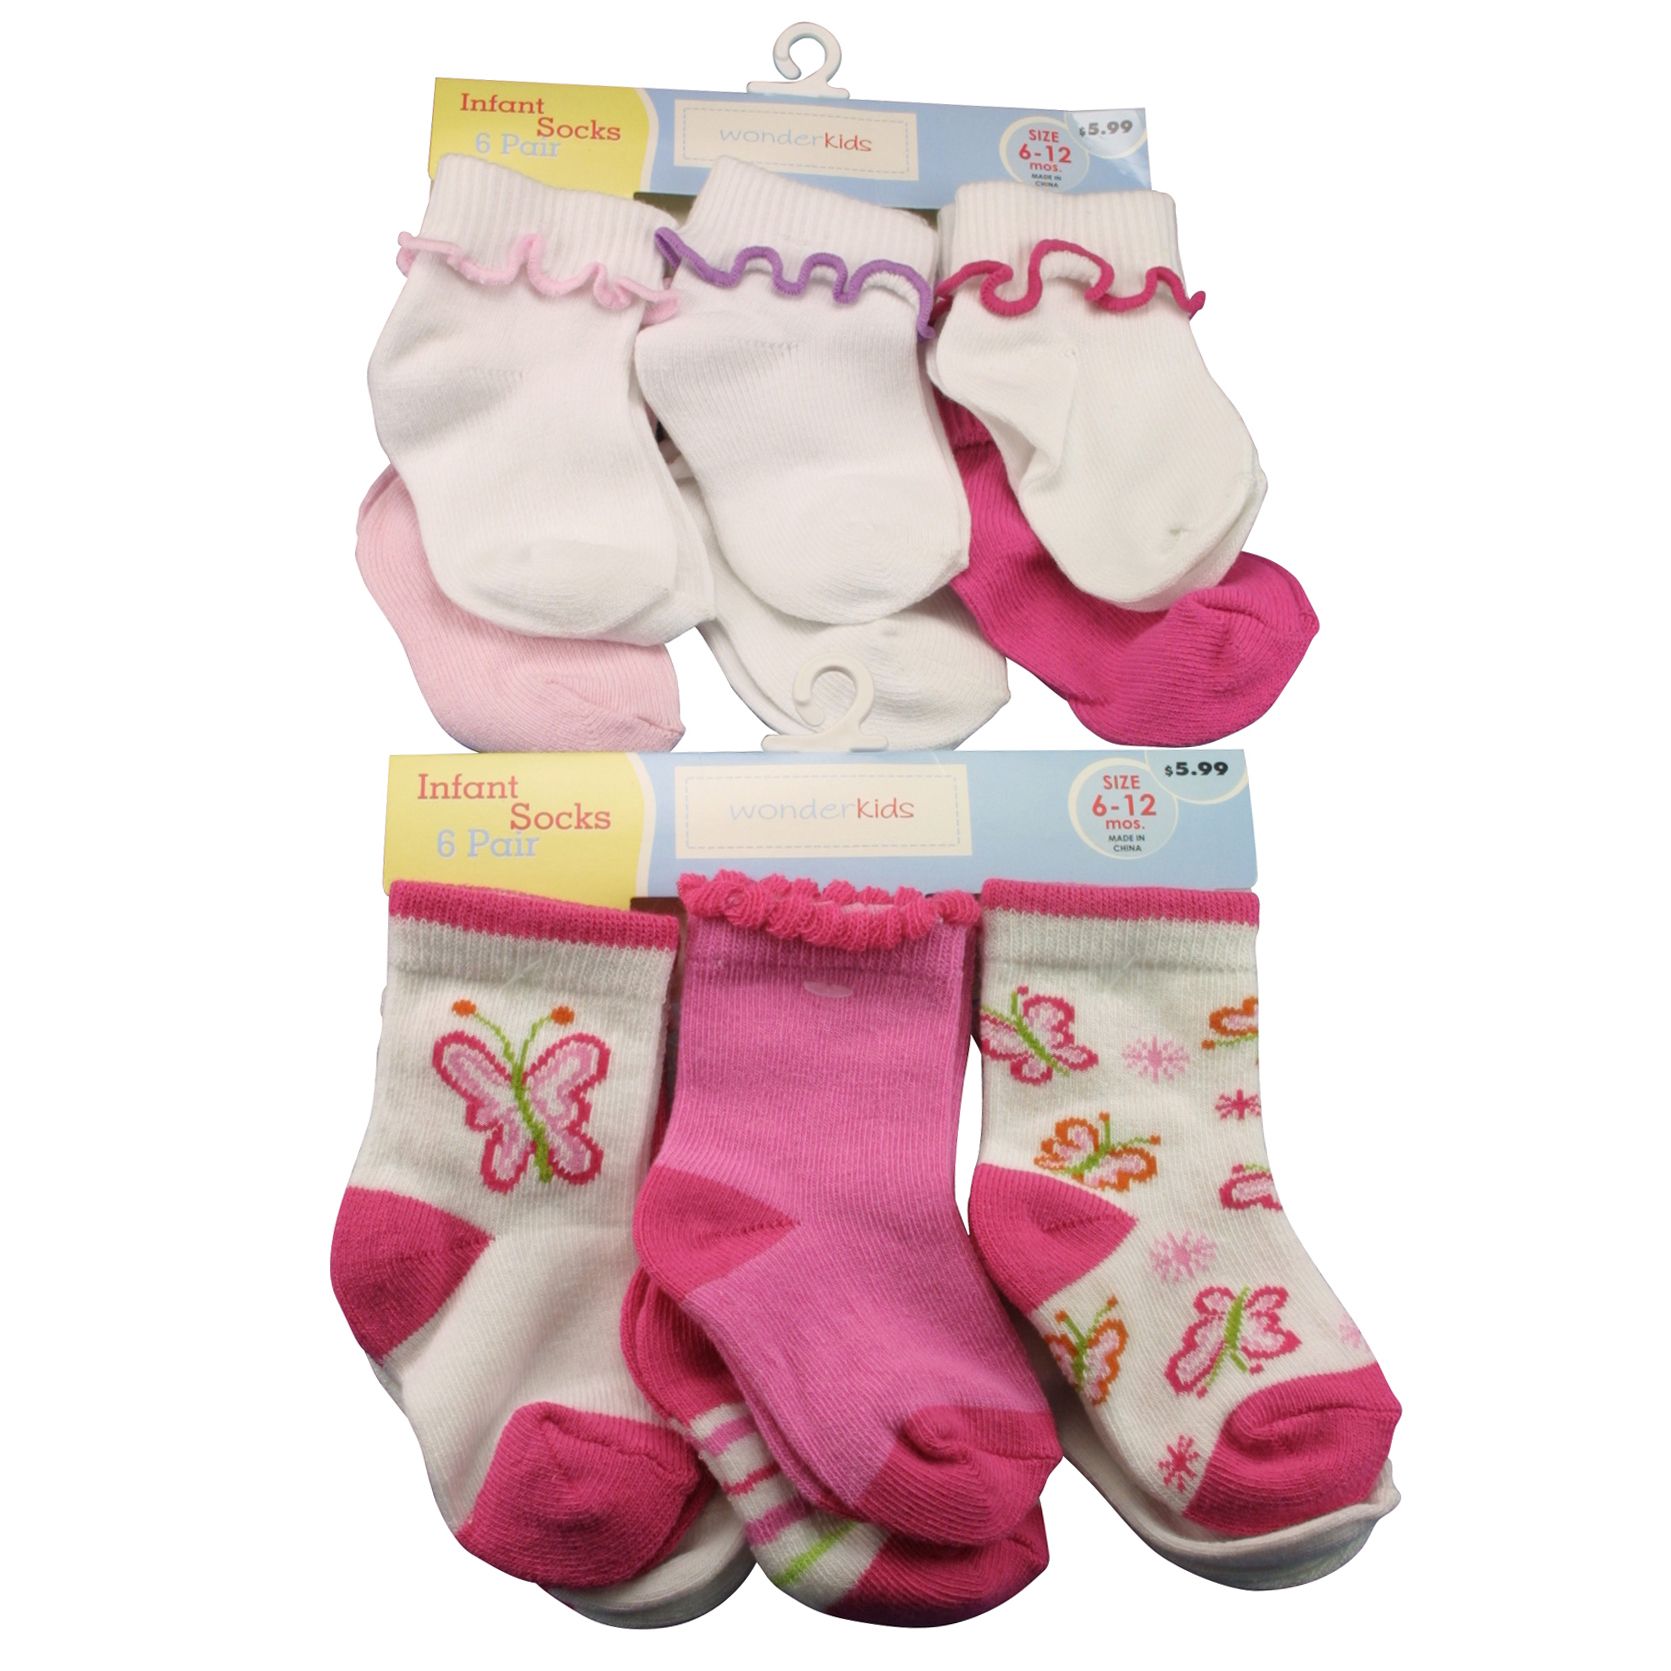 WonderKids Newborn Girl Surge/Turncuff Fashion Socks - 6 Pack